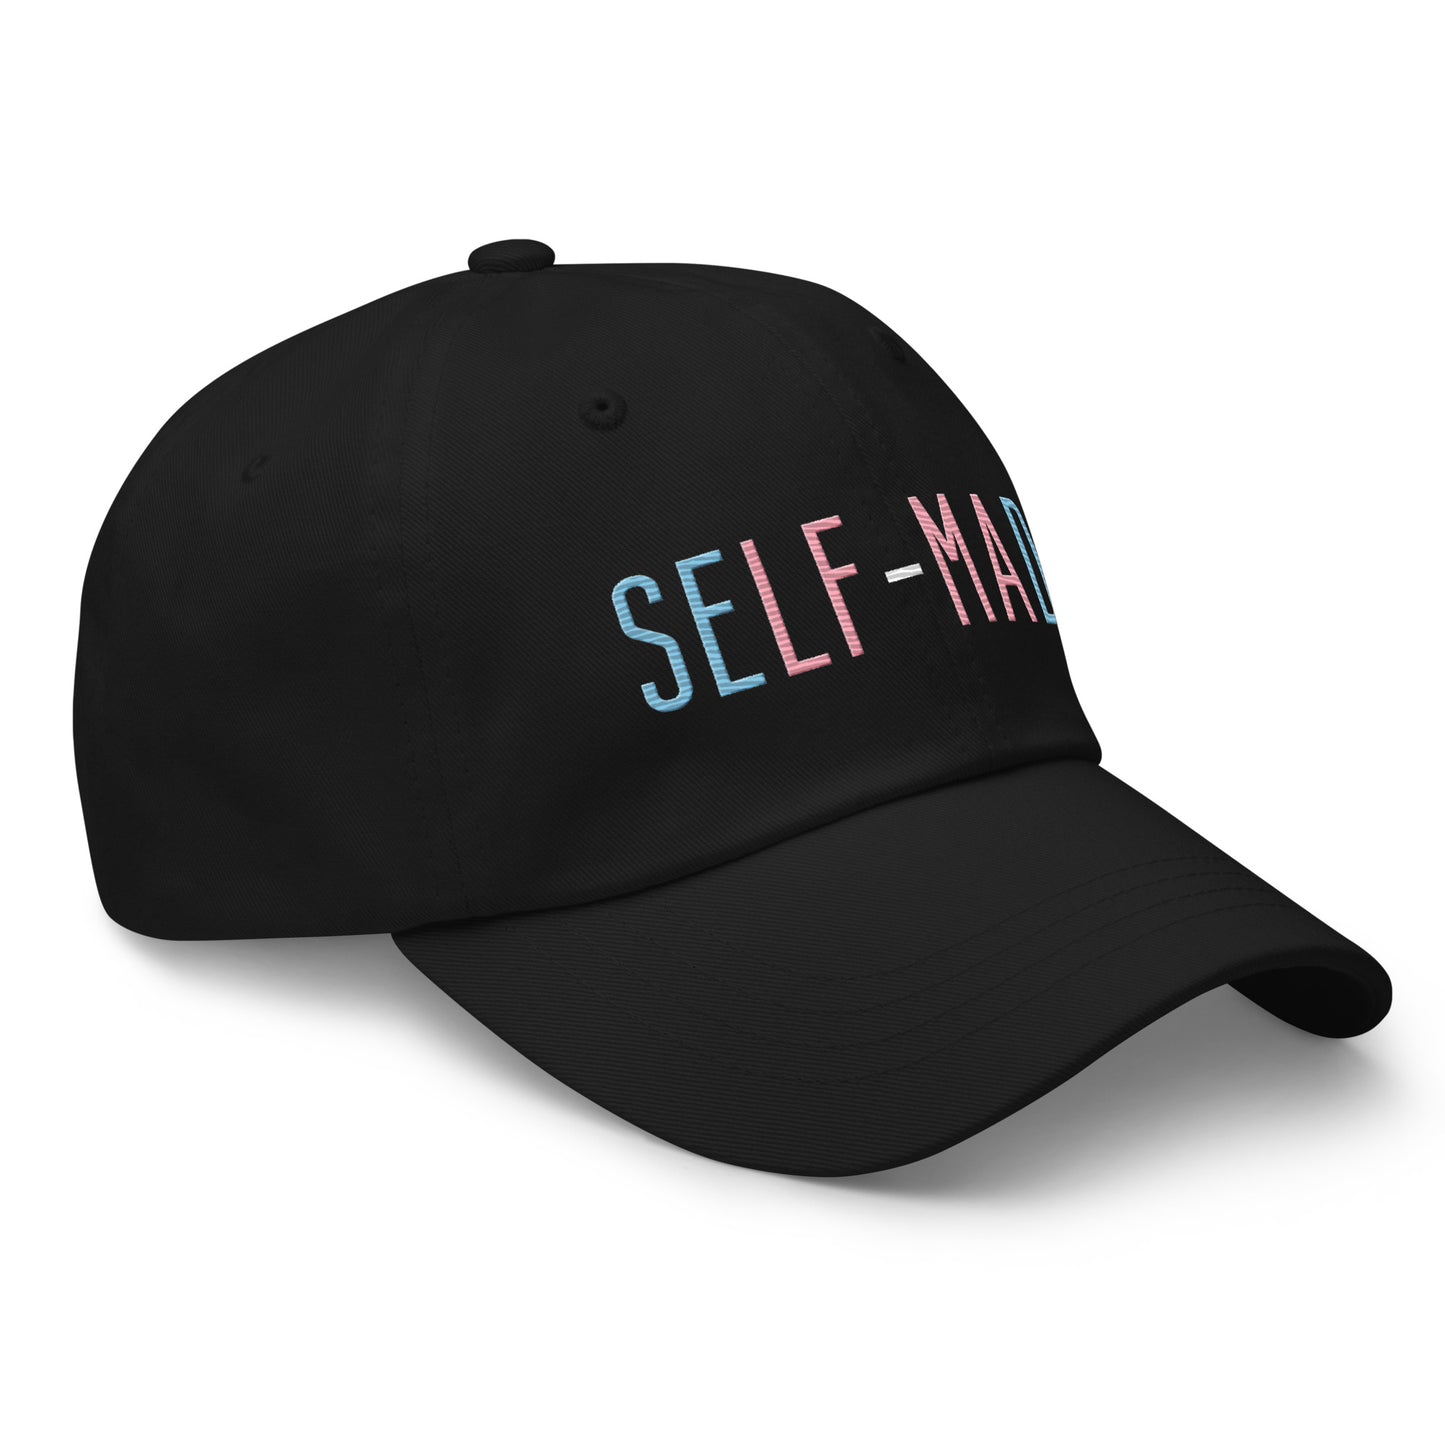 Self-Made Trans Pride Hat